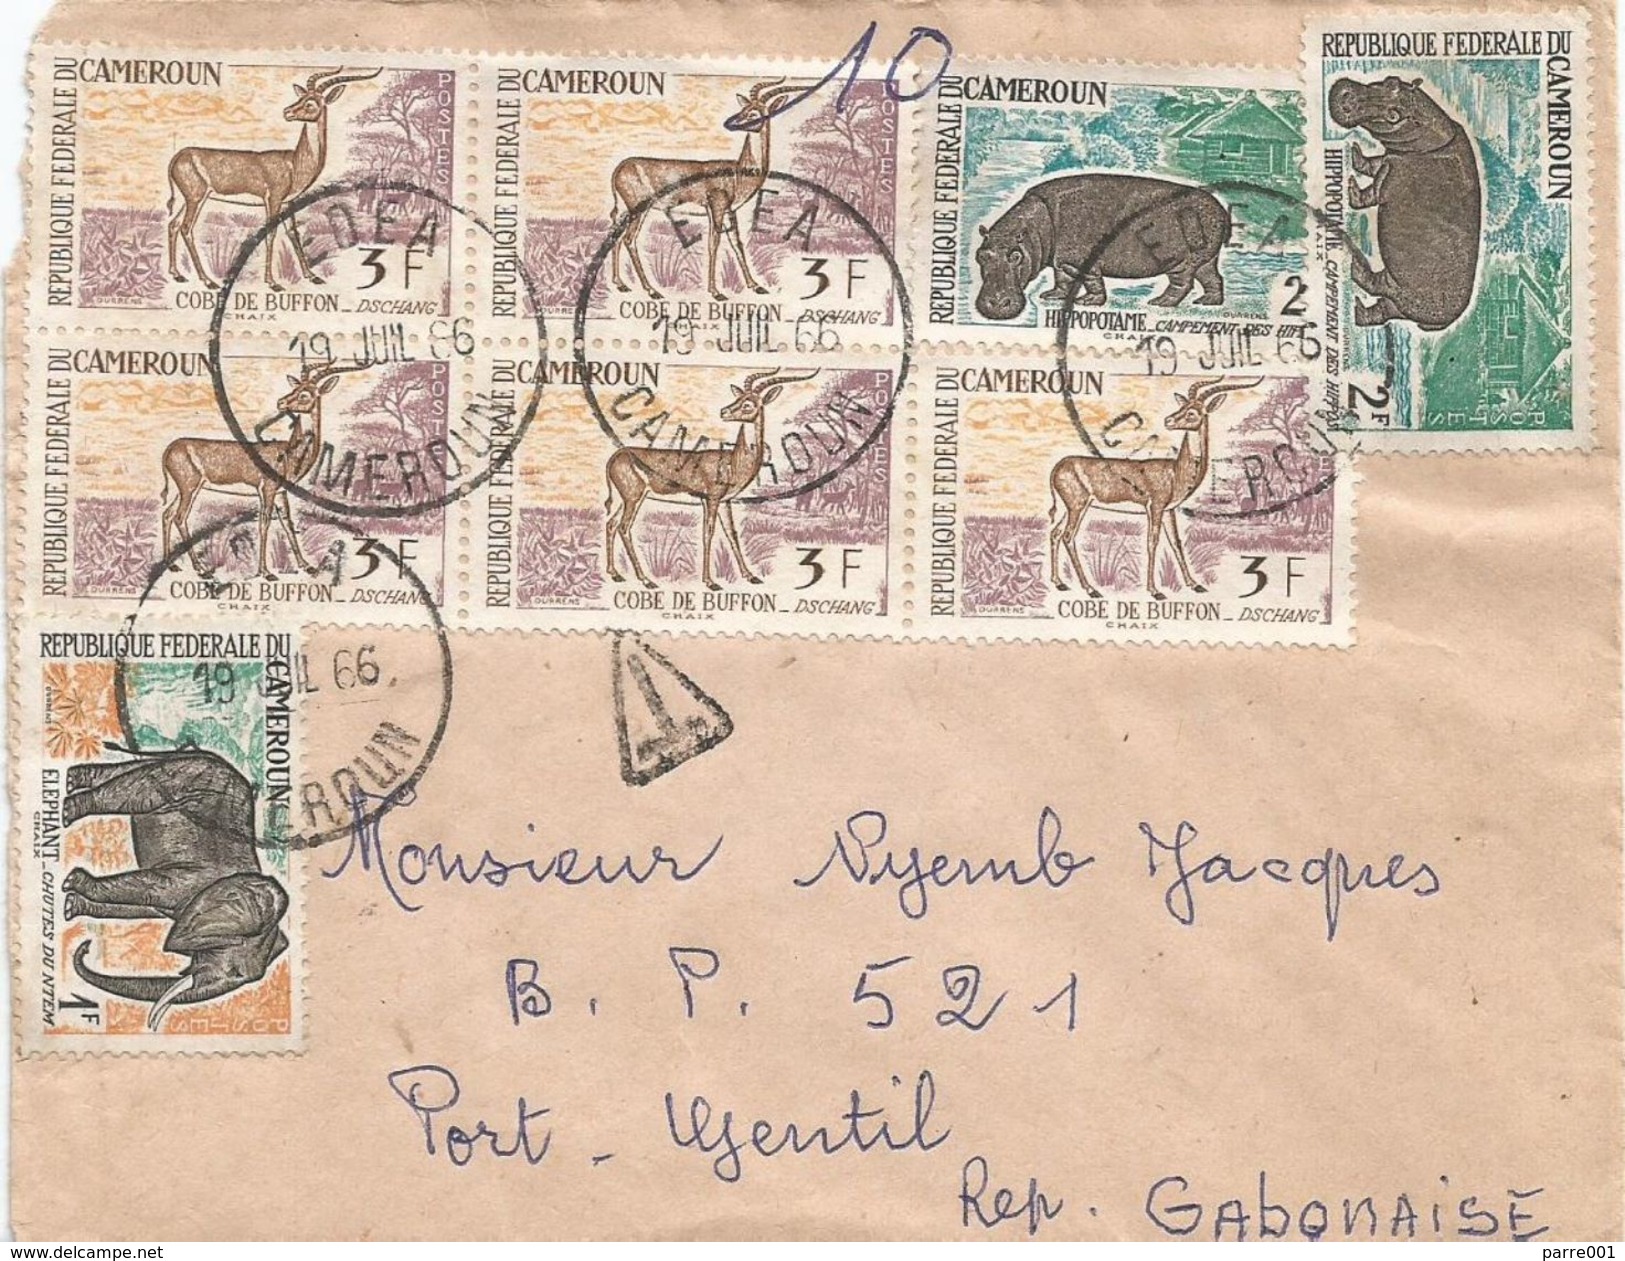 Gabon Cameroun 1966 Edea Taxed Hippo Elephant Underfranked Cover Fruit Postage Due Porto - Gabon (1960-...)